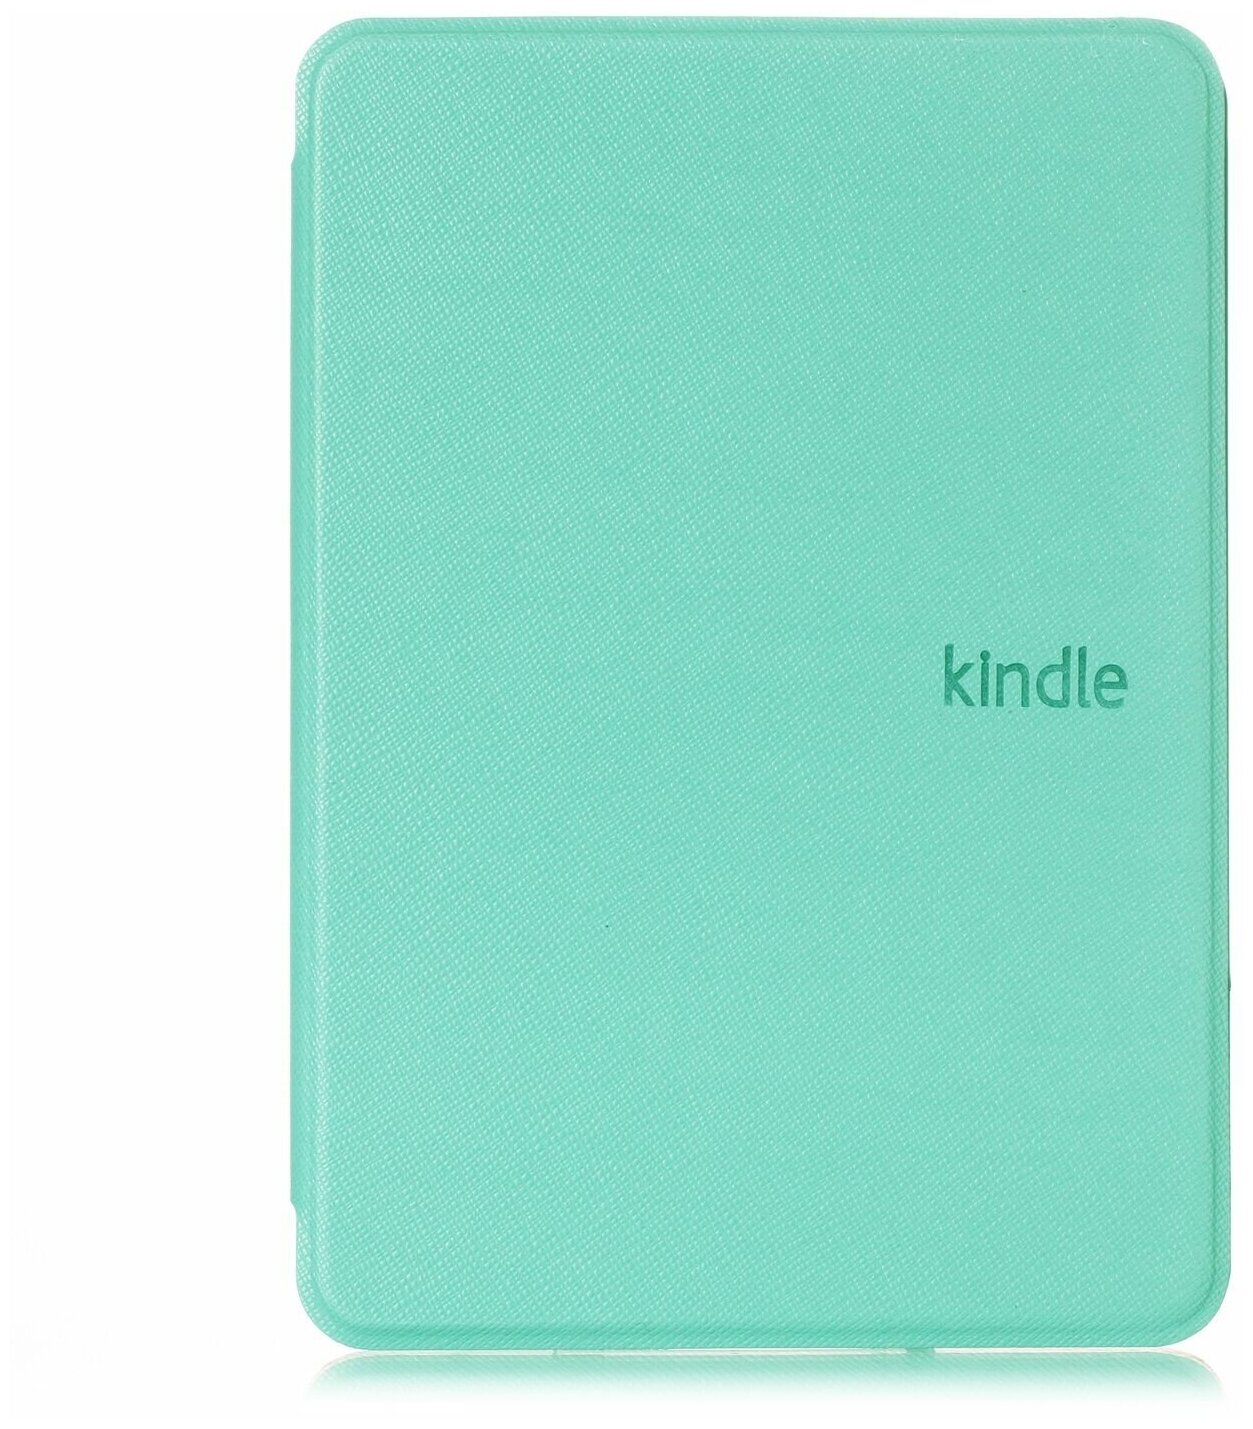 -  Amazon Kindle PaperWhite 2018 mint green